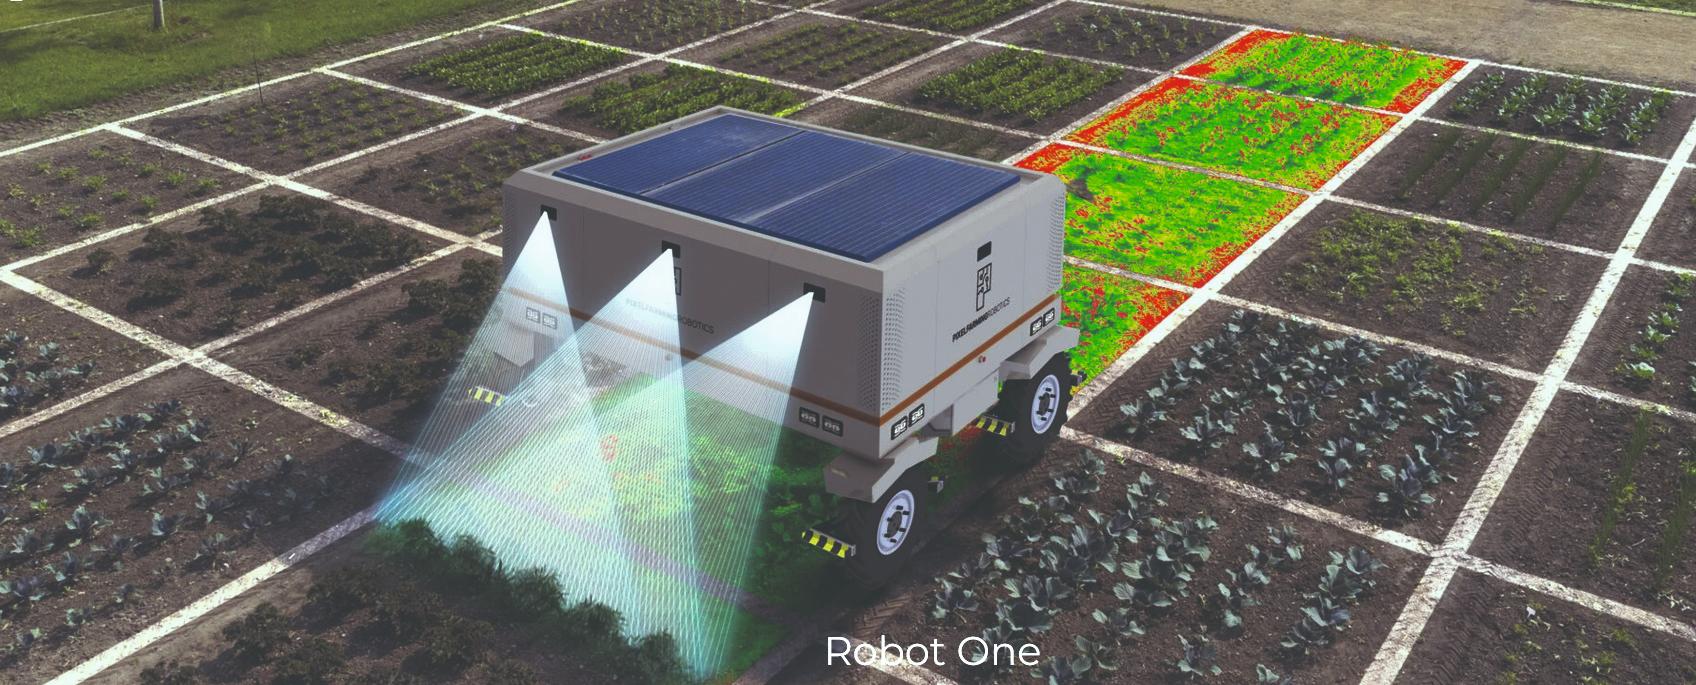 poljoprivredni robot robot one